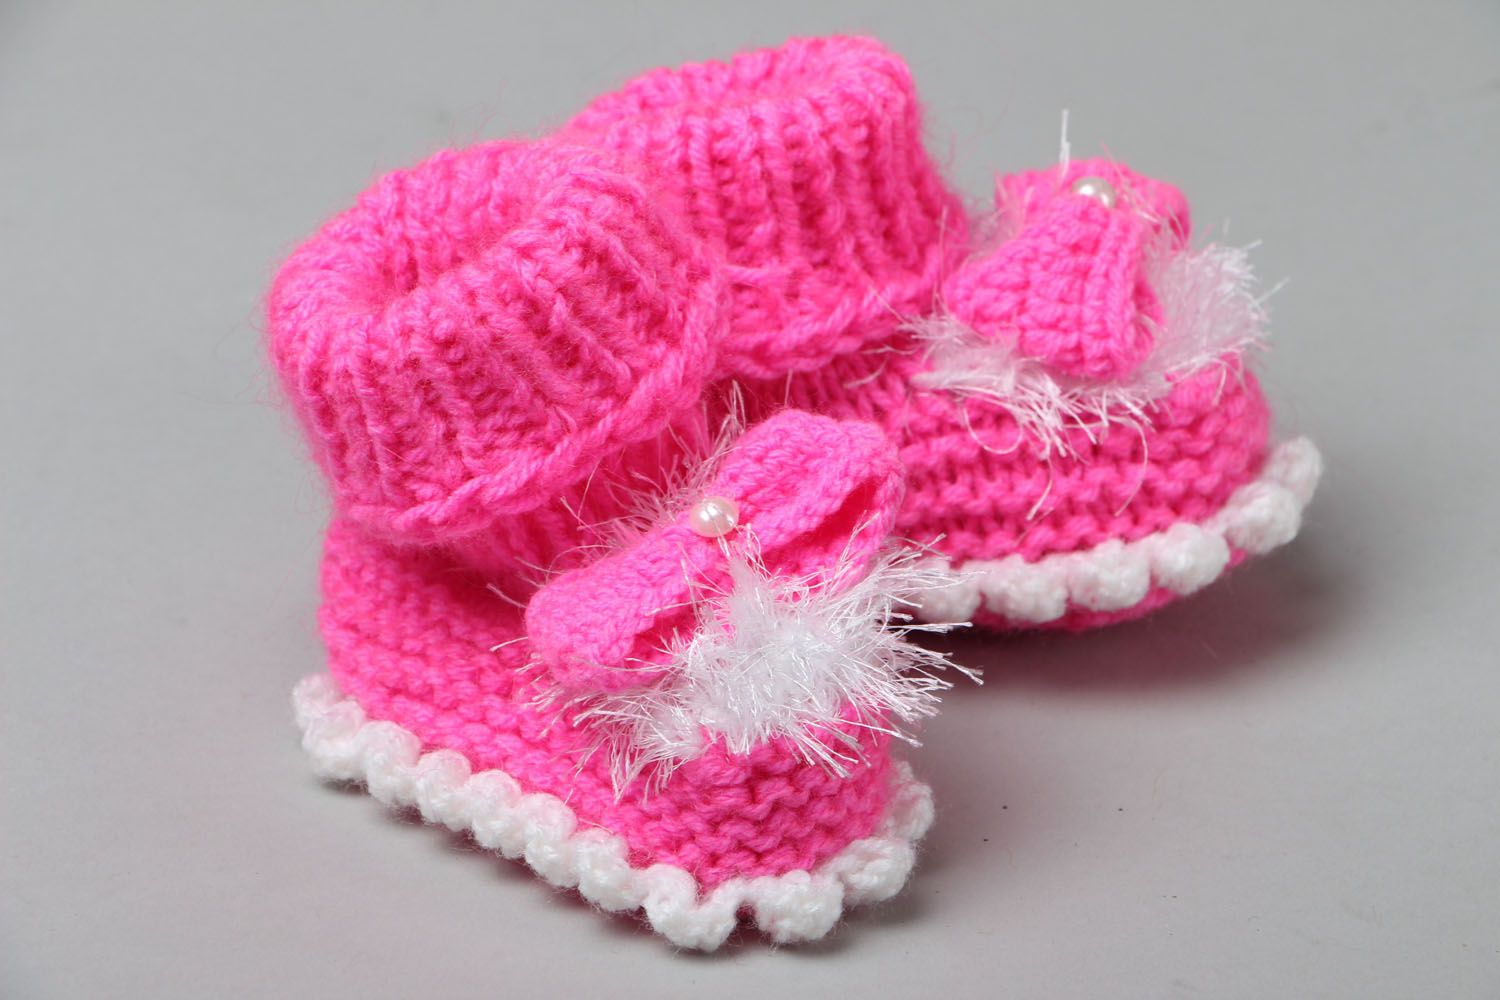 Homemade pink baby booties photo 1